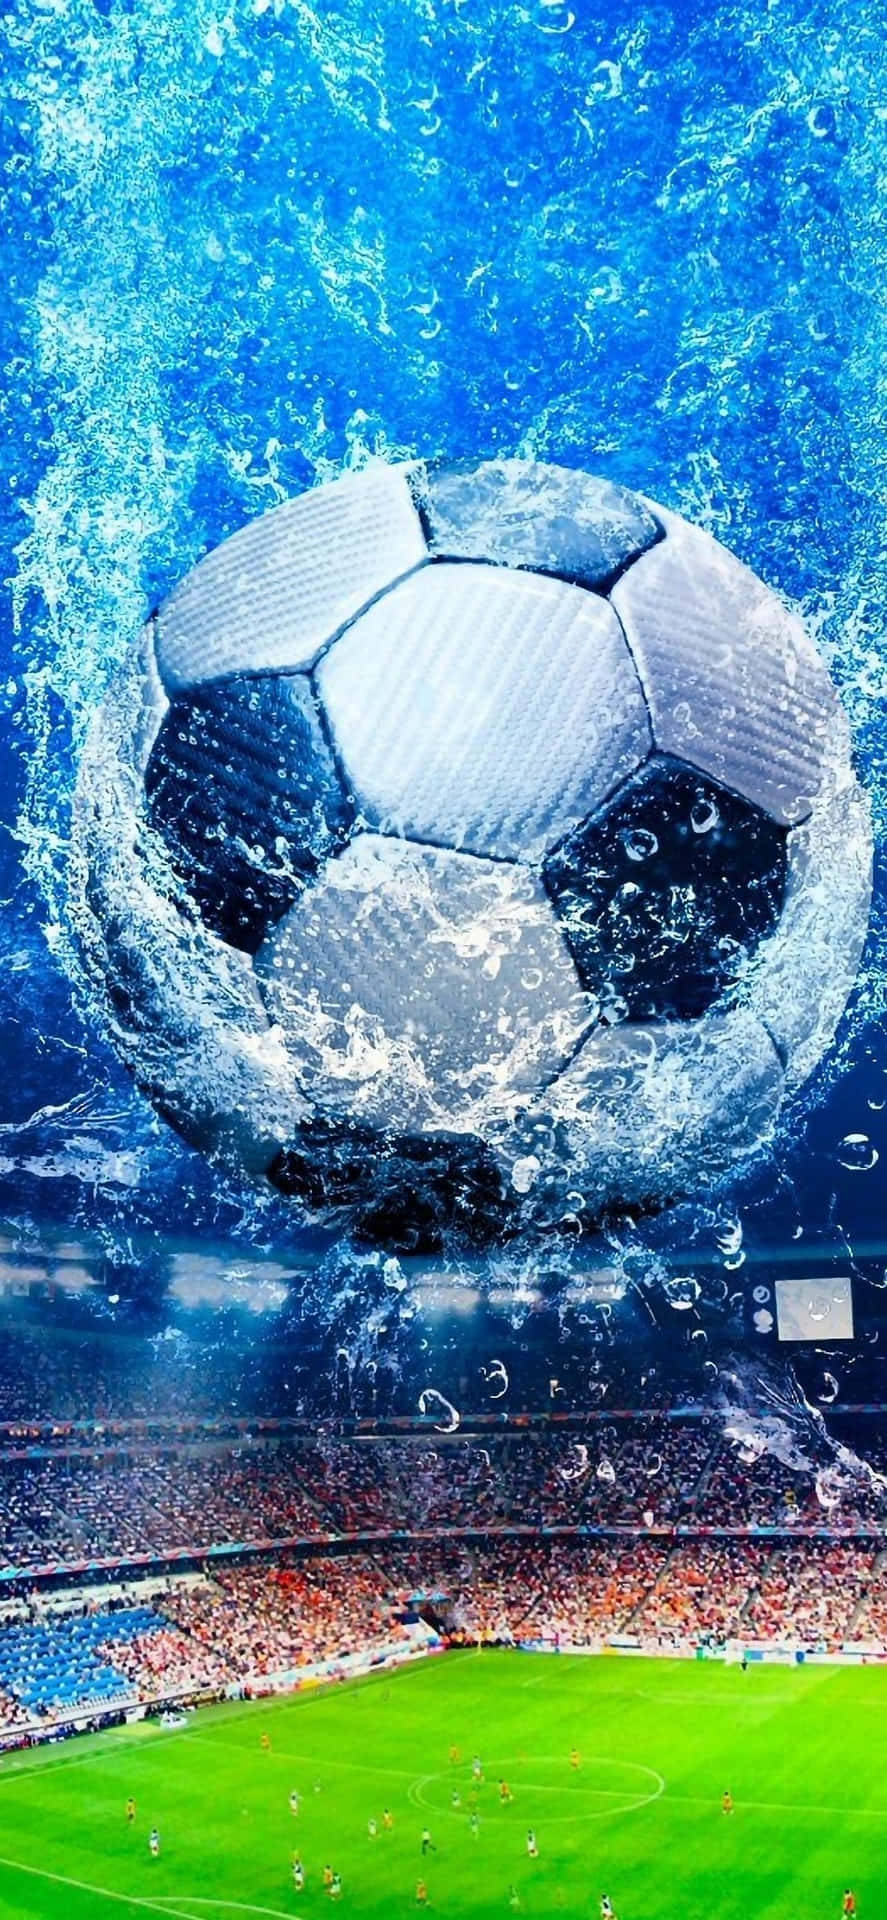 Graphic Edit Of Soccer Ball In Football Field Wallpaper